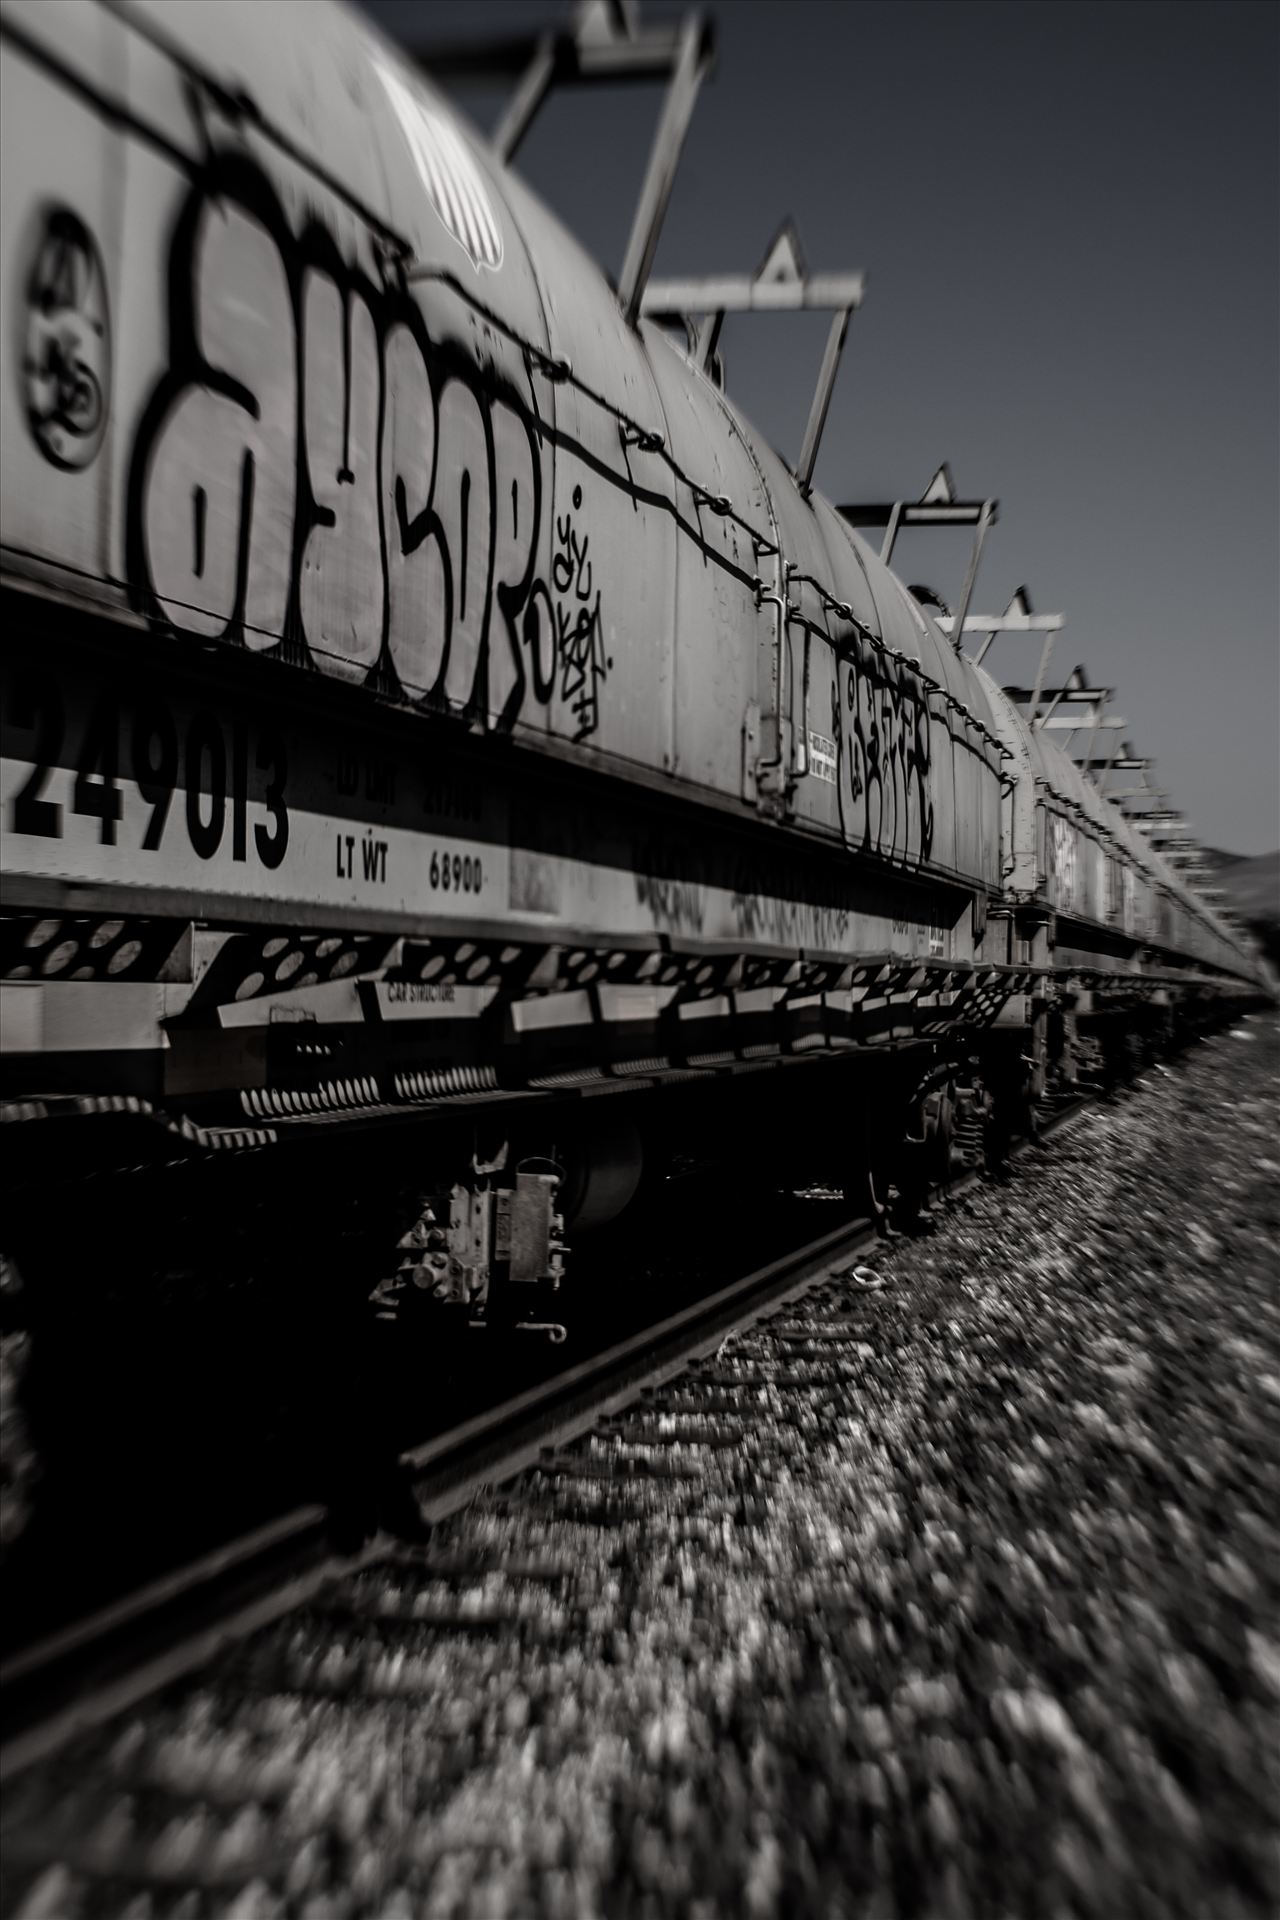 Graffiti Tankers Desaturated.jpg Graffiti on oil tankers and infinity train tracks by Sarah Williams